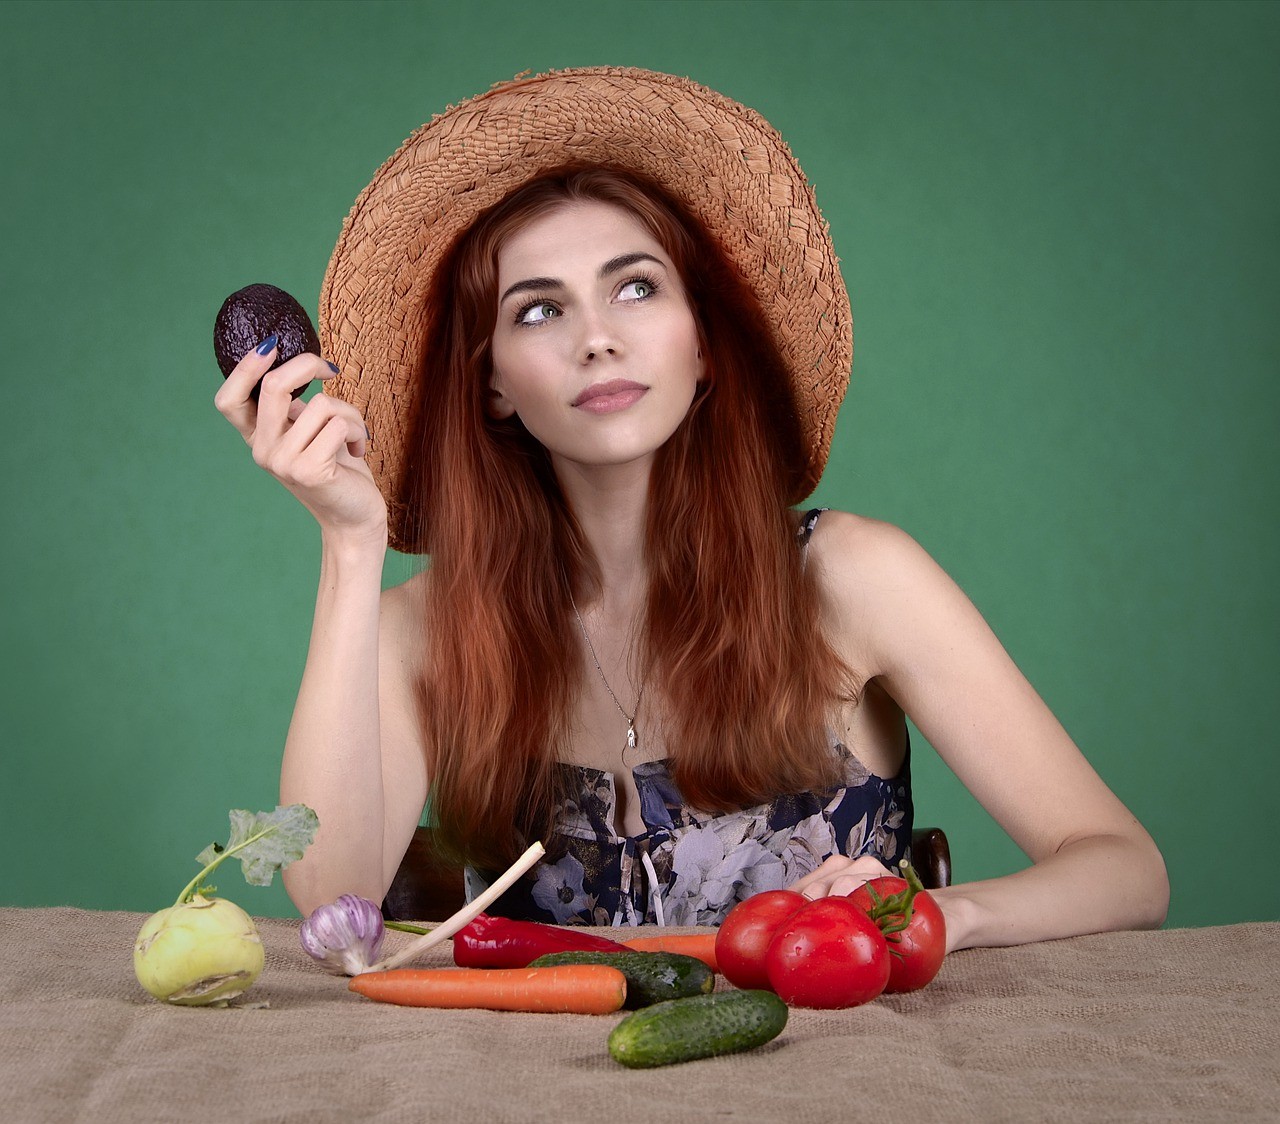 Amazing health benefits of avocado for women